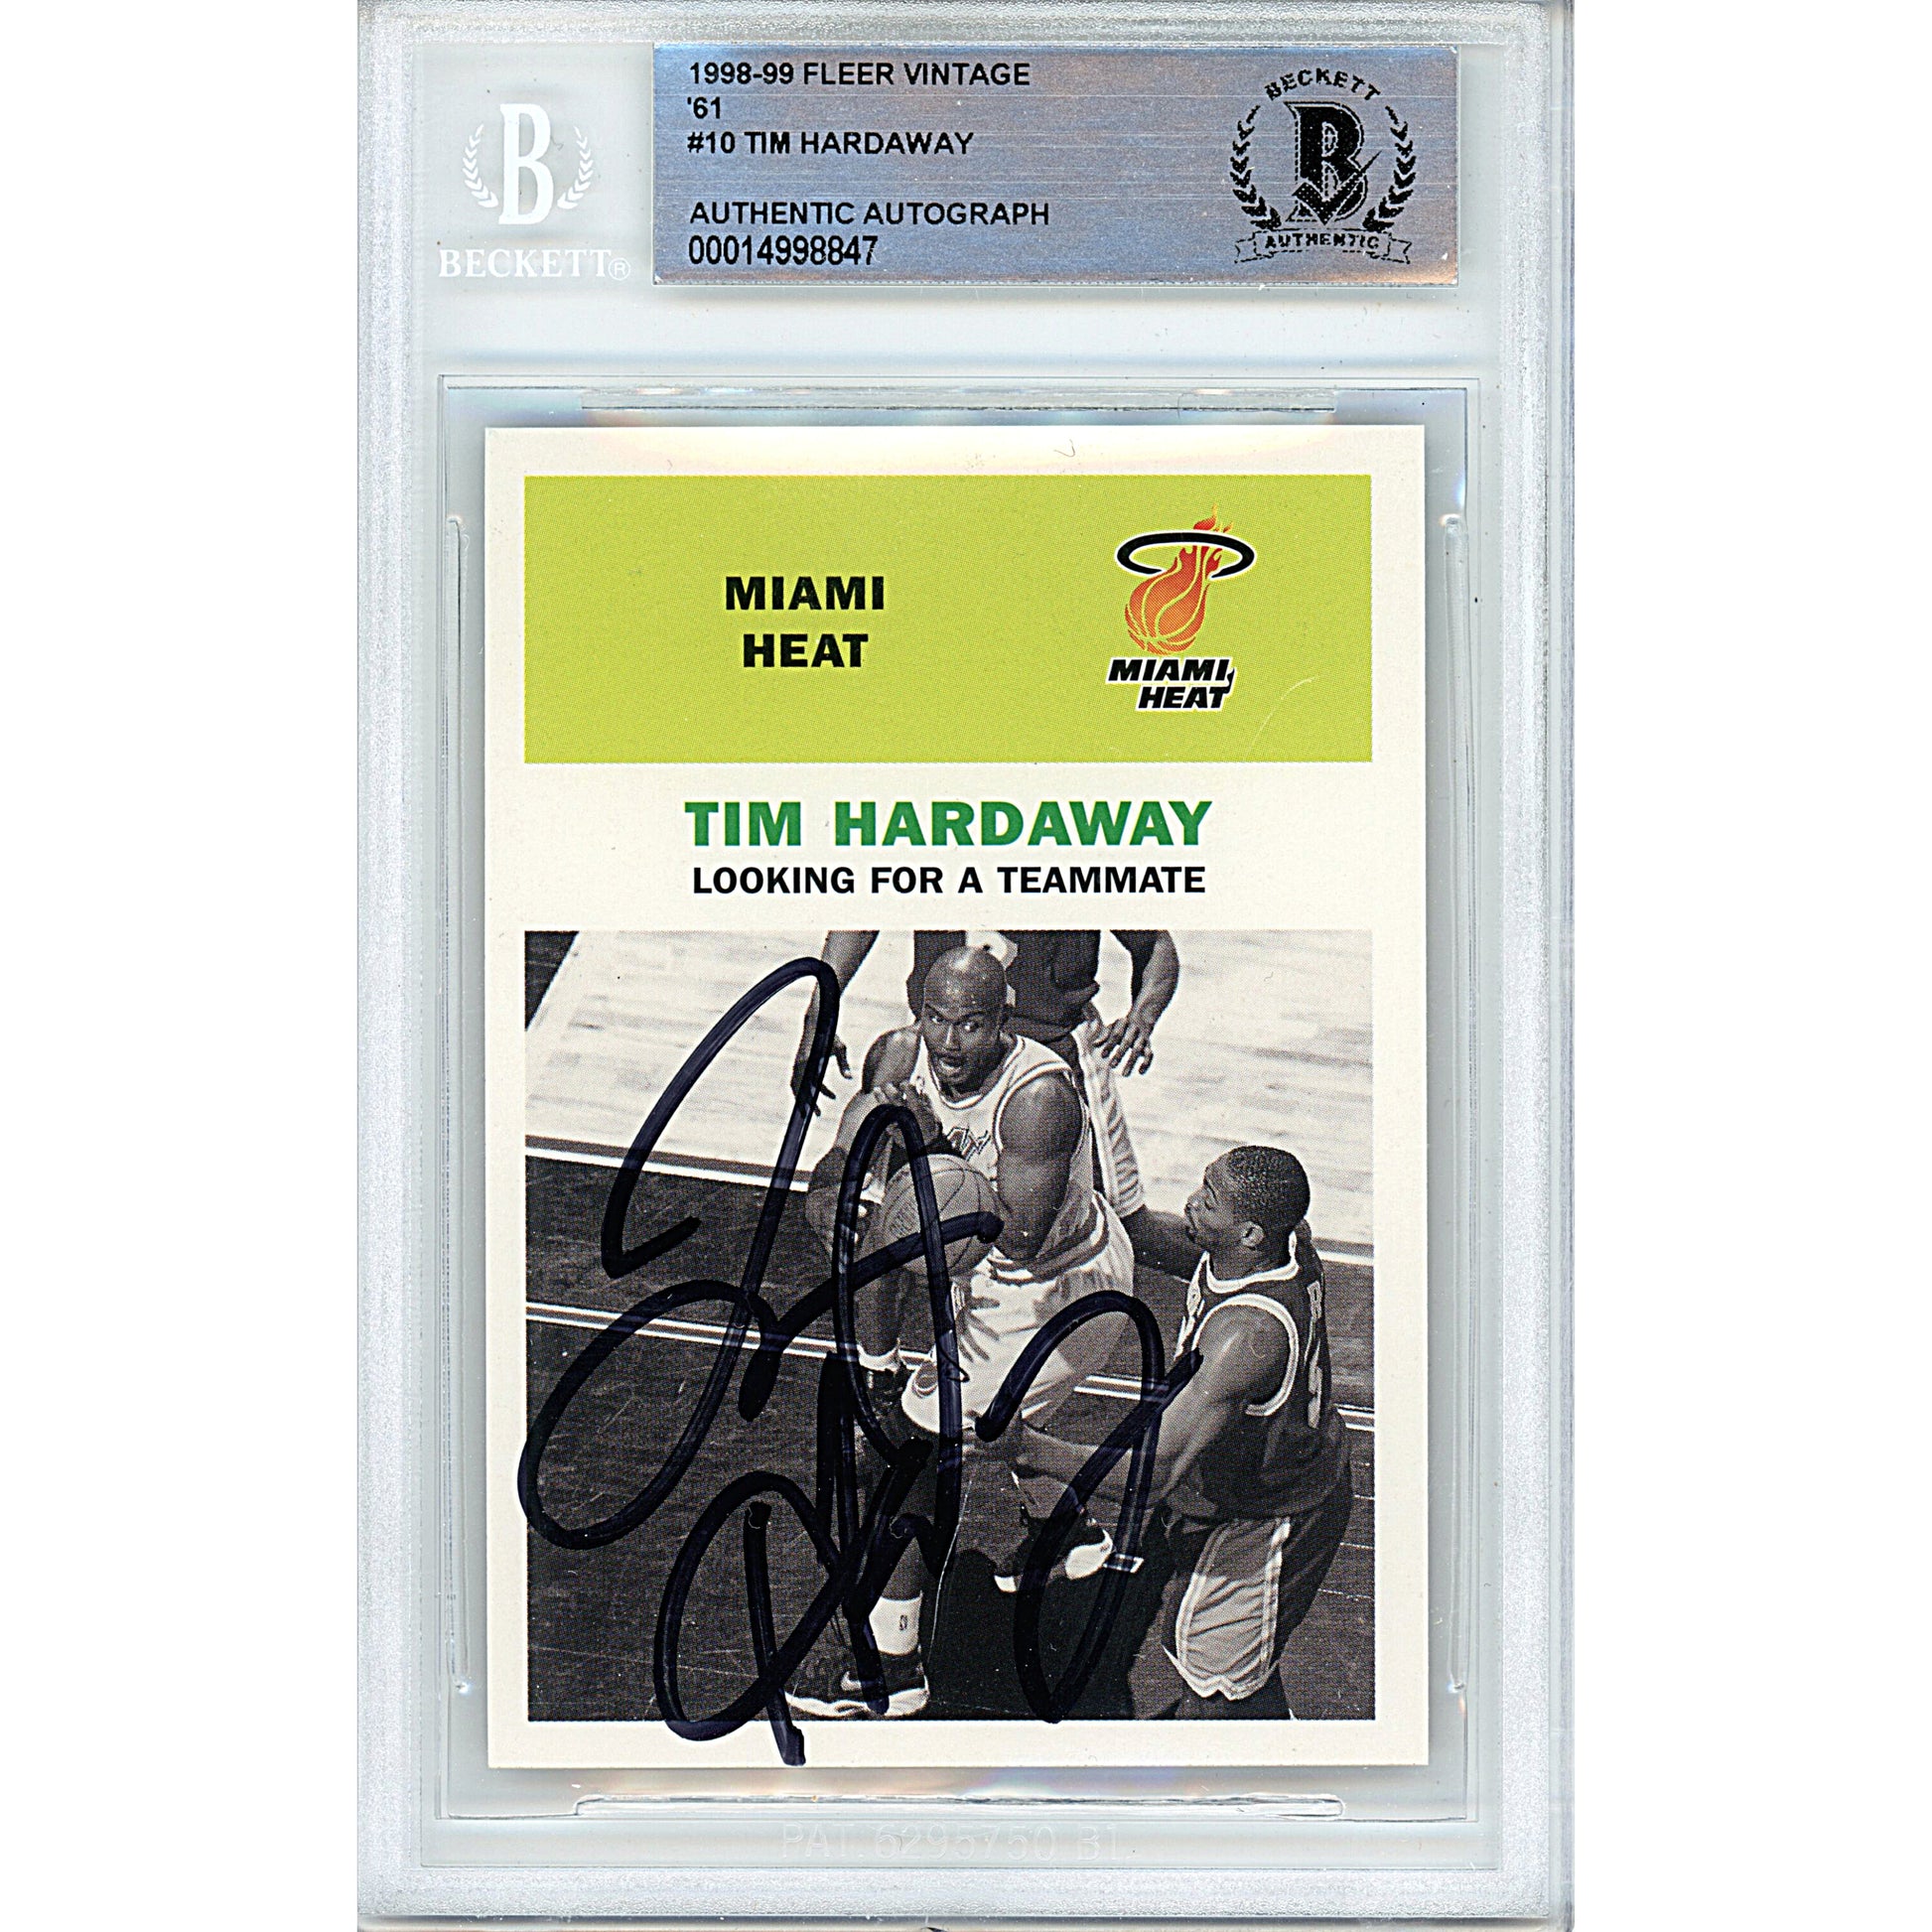 Basketballs- Autographed- Tim Hardaway Signed Miami Heat 1998-1999 Fleer Vintage '61 Basketball Card Beckett Authentication Slabbed 00014998847 - 101